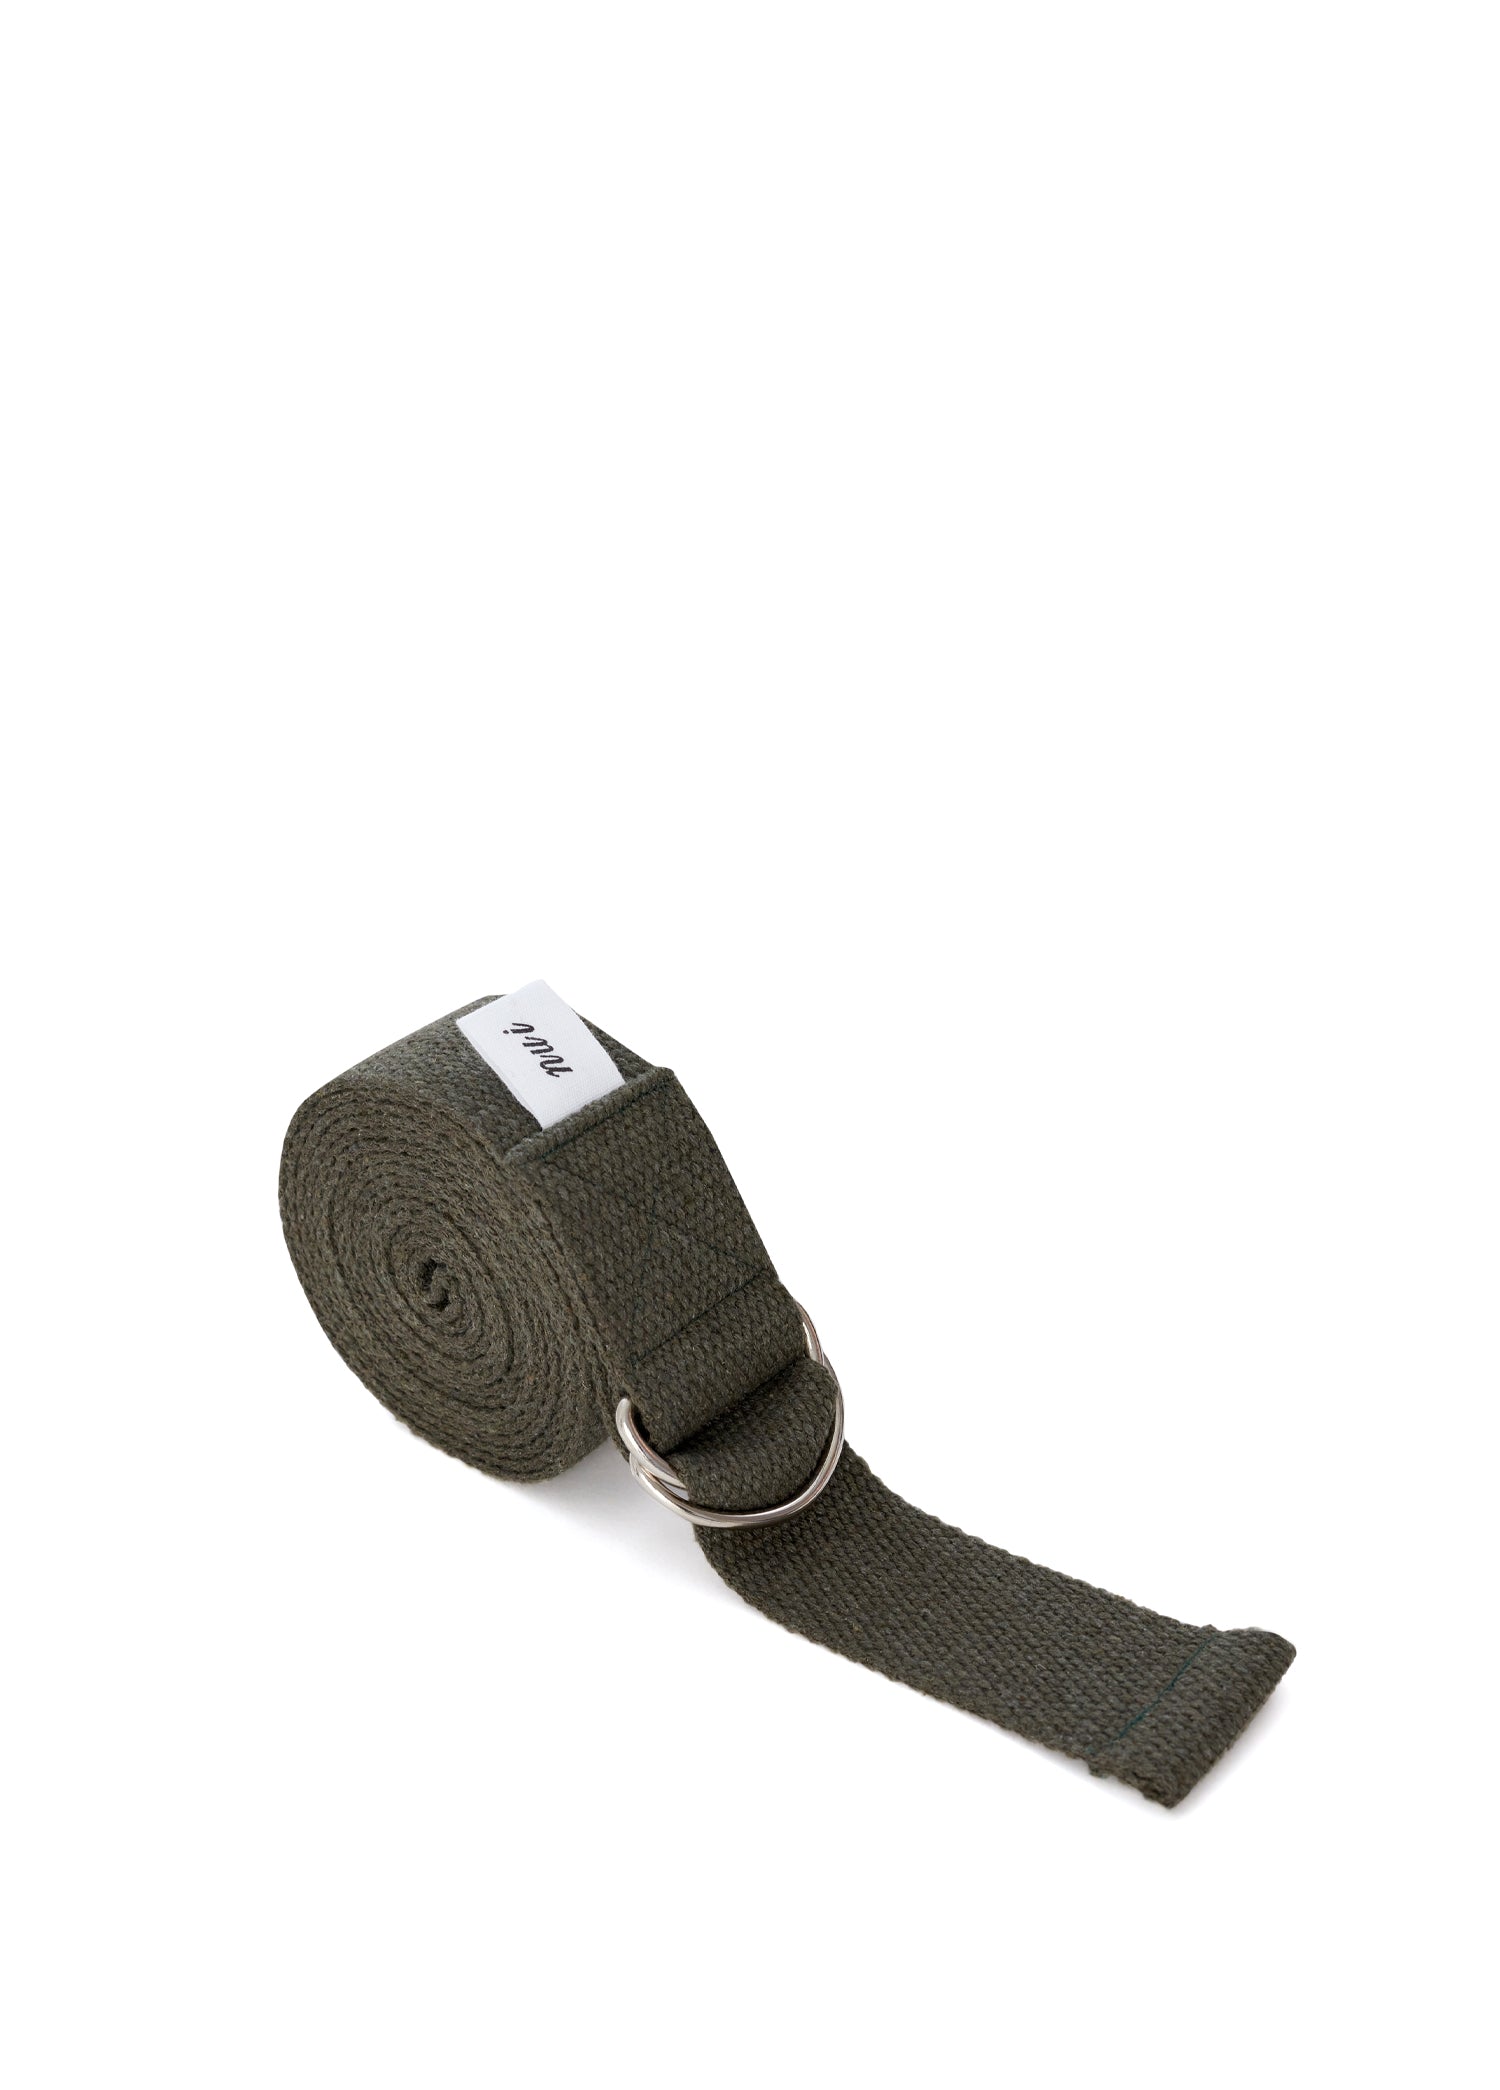 Green Yoga Belt ( Strap )